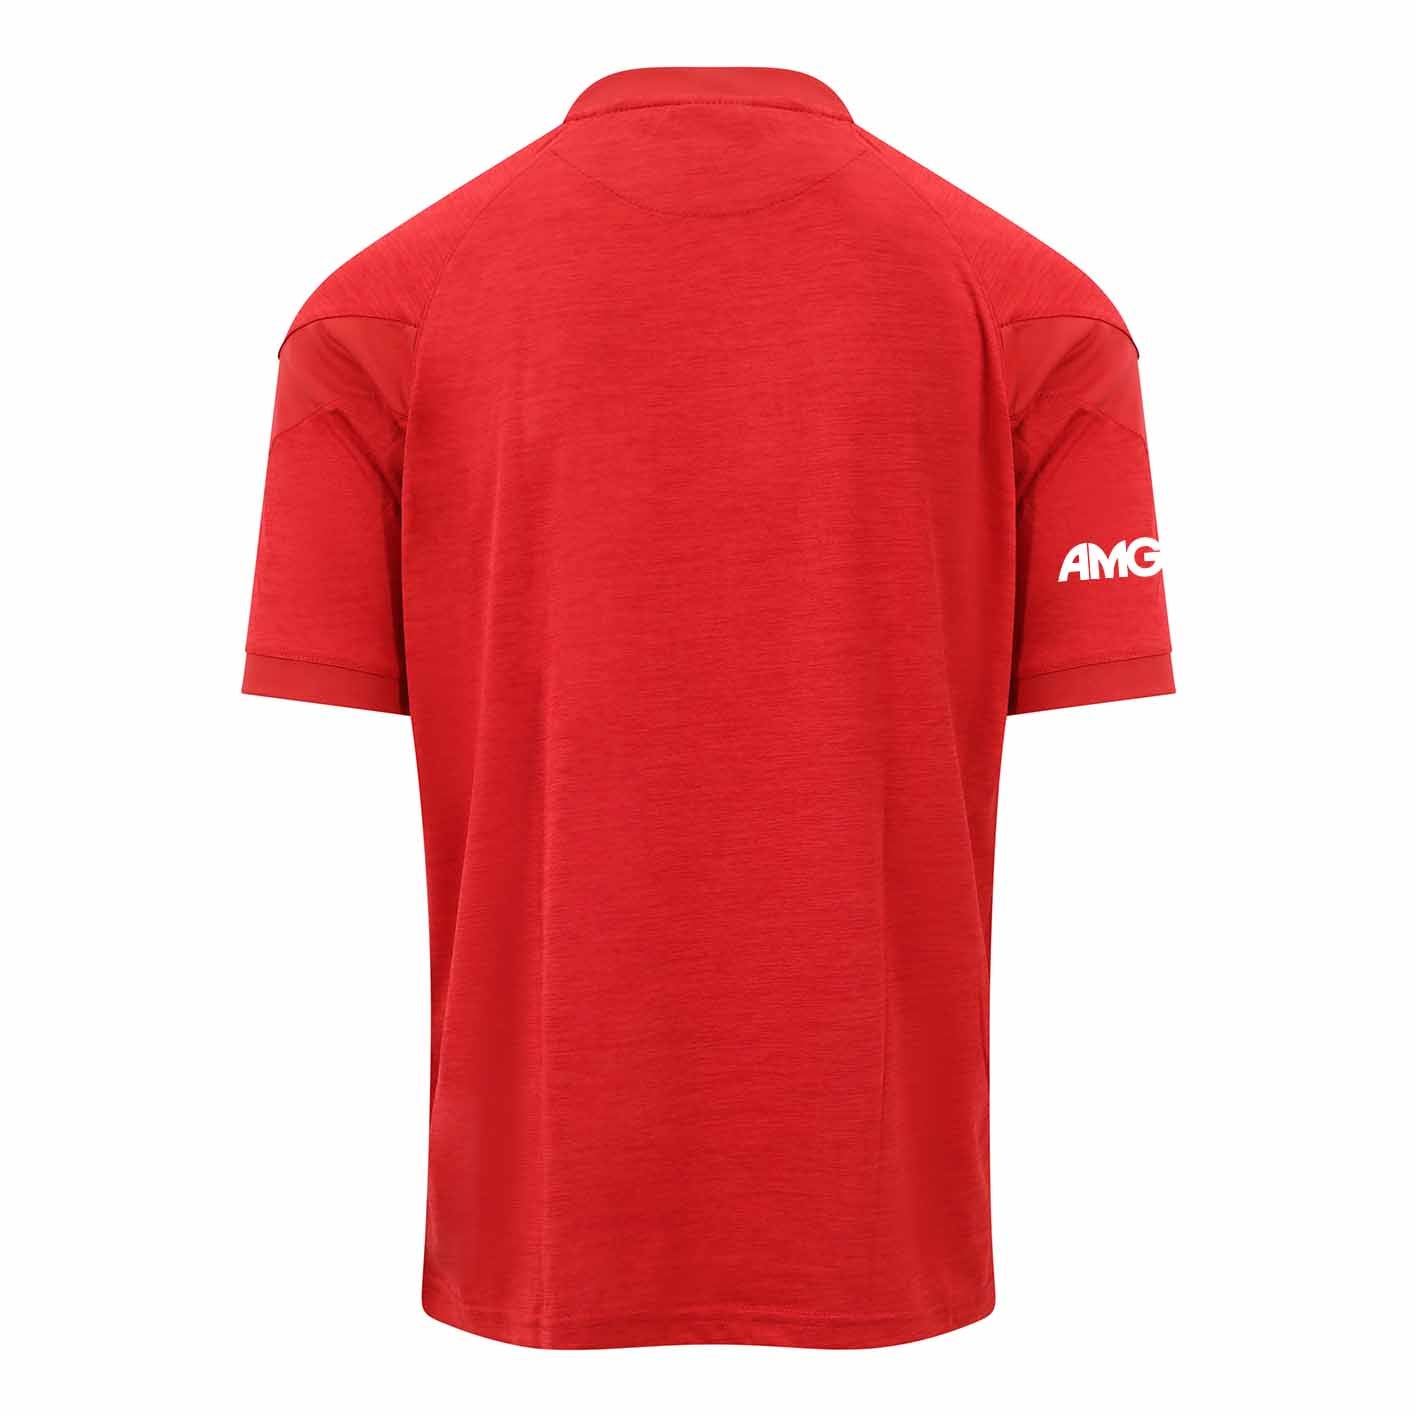 Mc Keever Cuala GAA Core 22 T-Shirt - Youth - Red